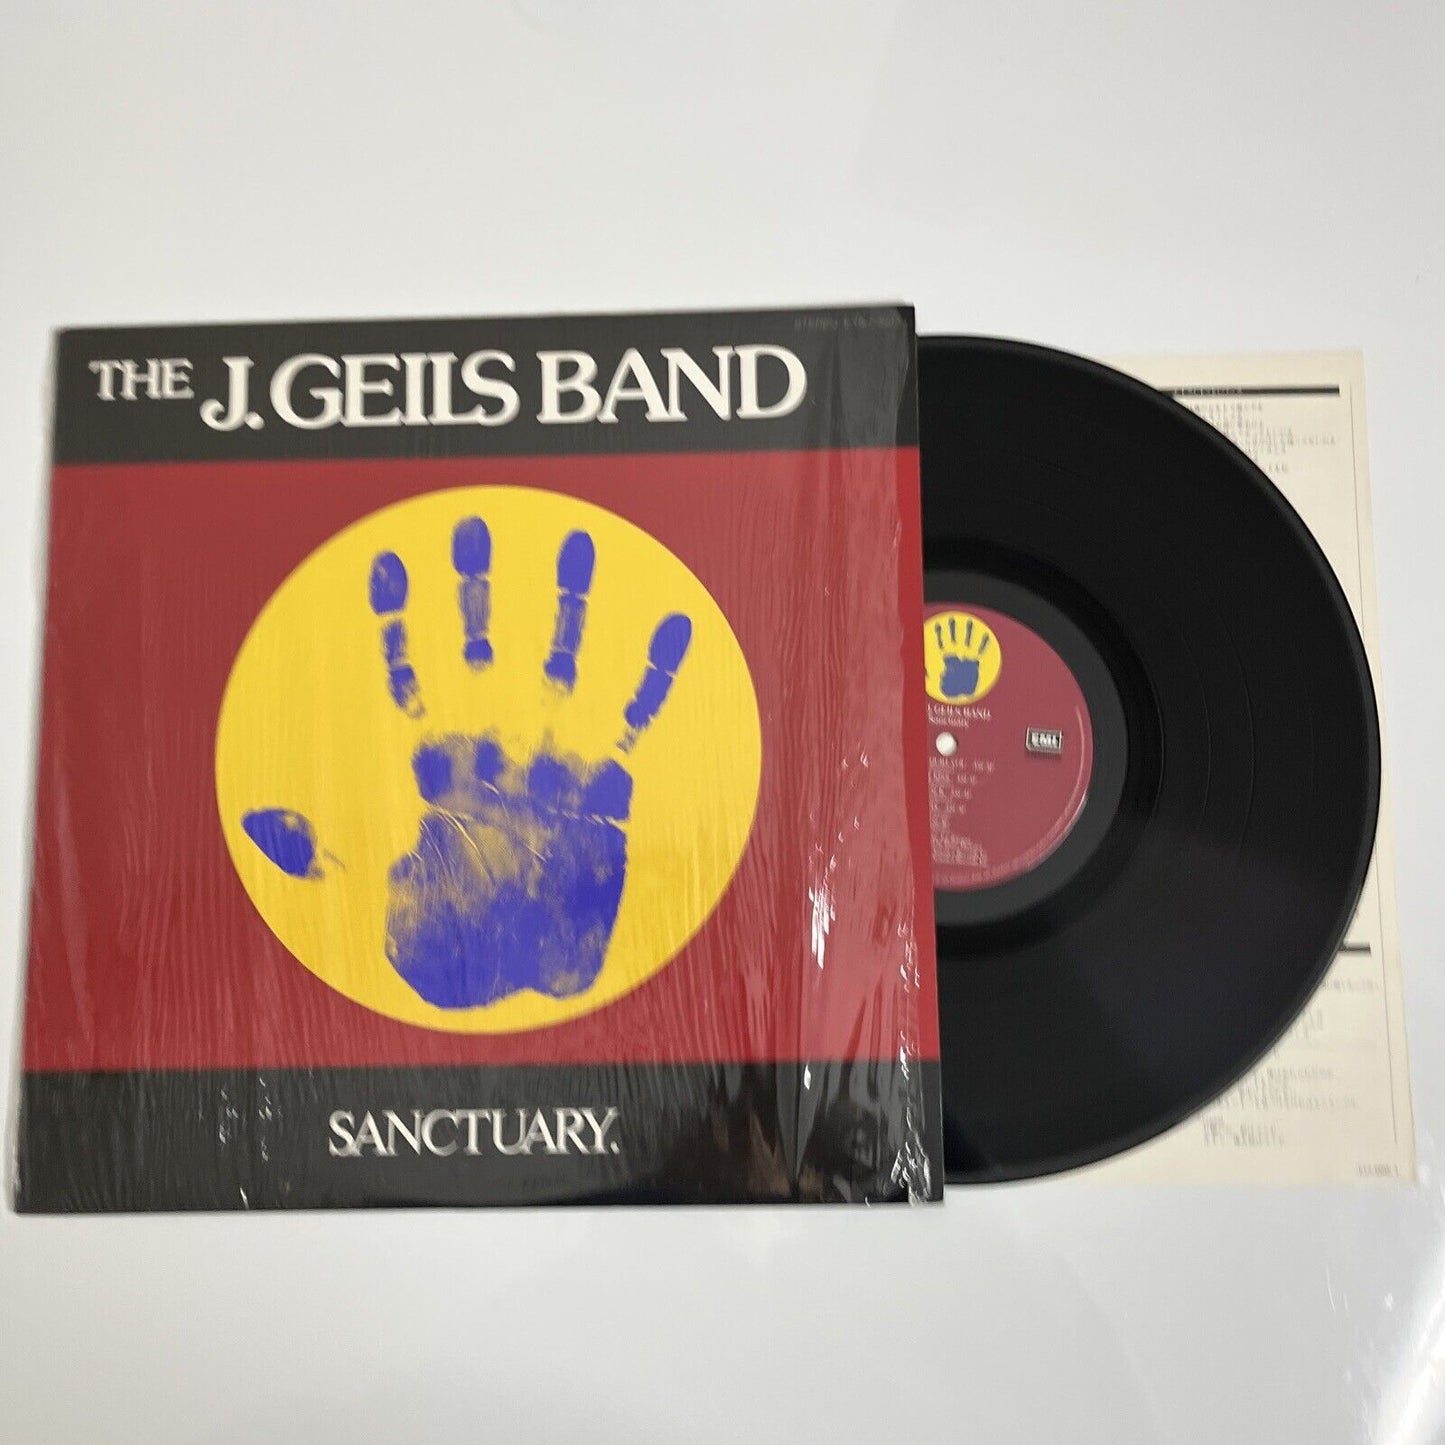 The J. Geils Band – Sanctuary LP 1978 Vinyl Record EYS-63033